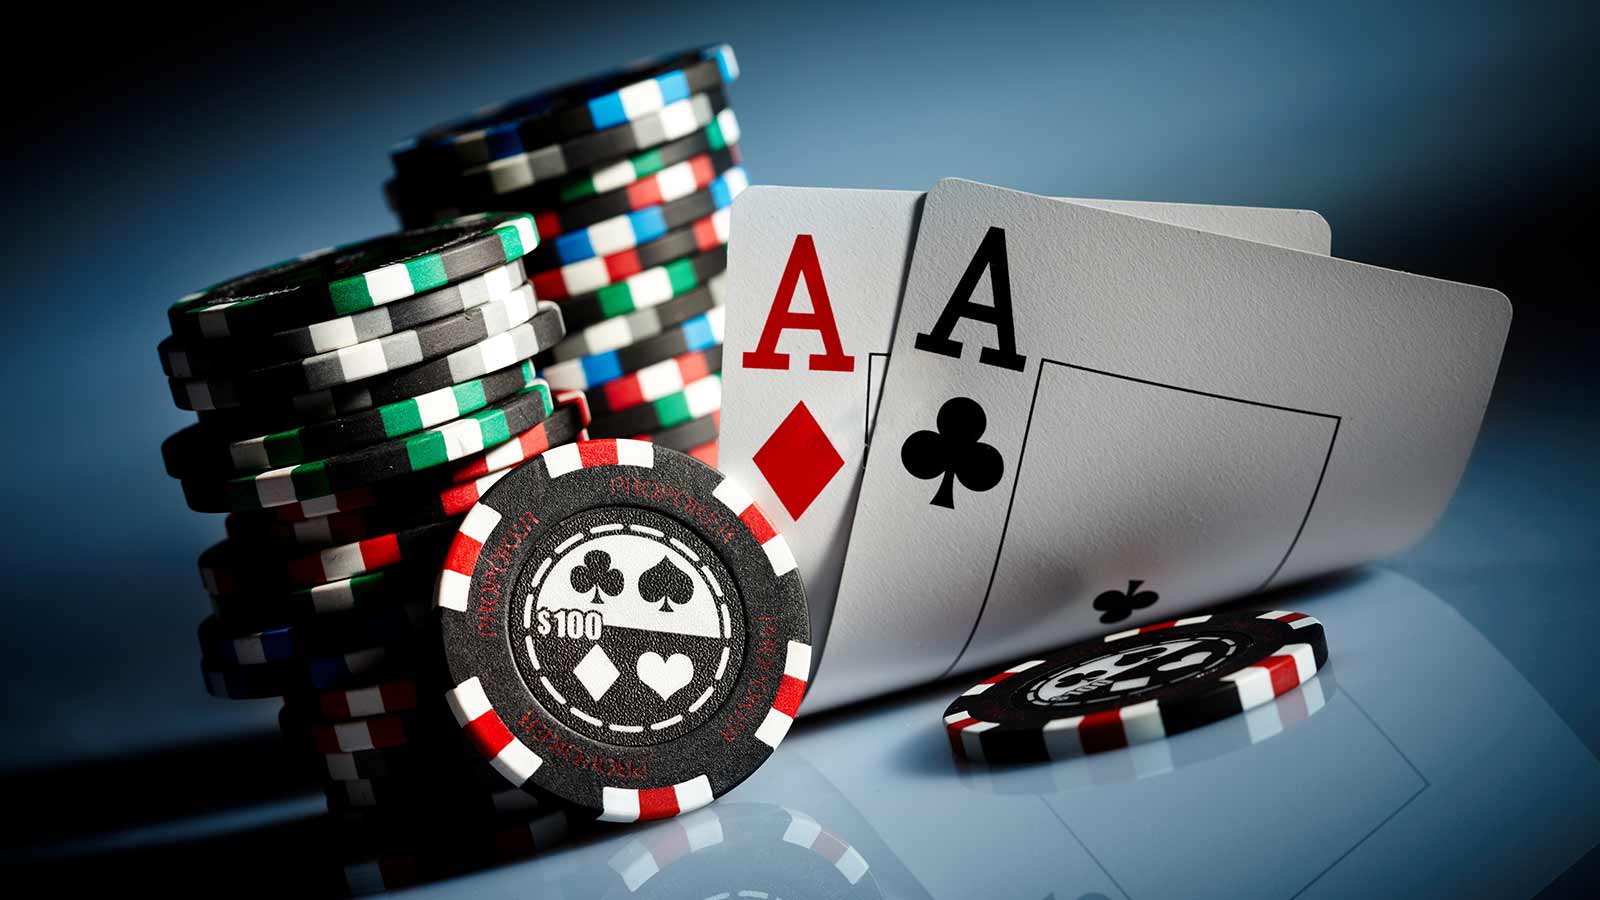 How popular is poker